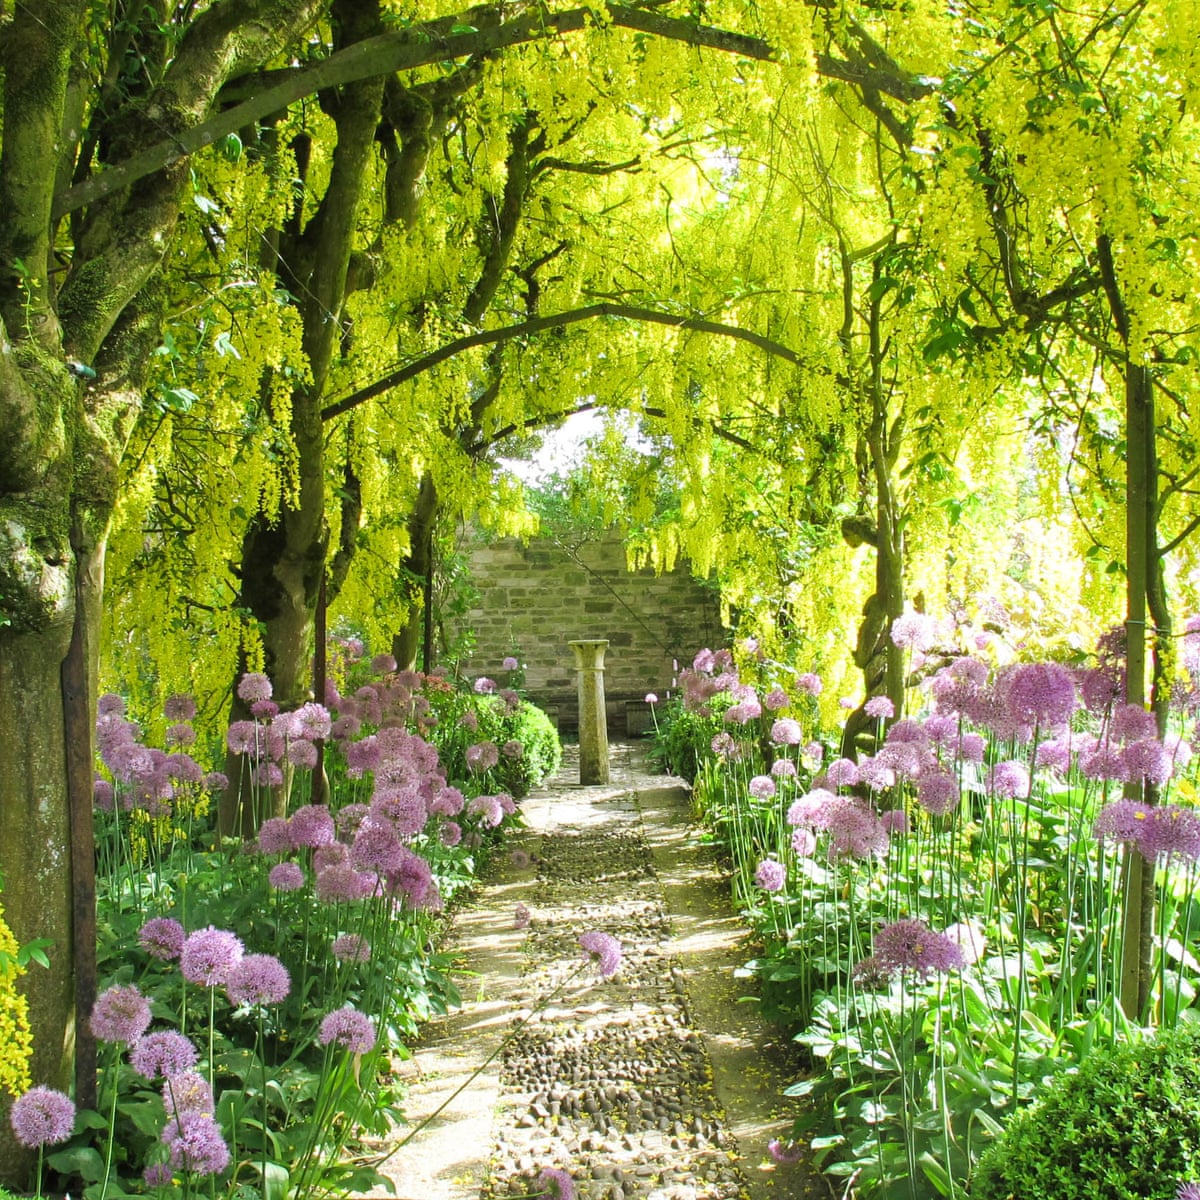 10 beautiful garden getaways in the UK | Travel | The Guardian